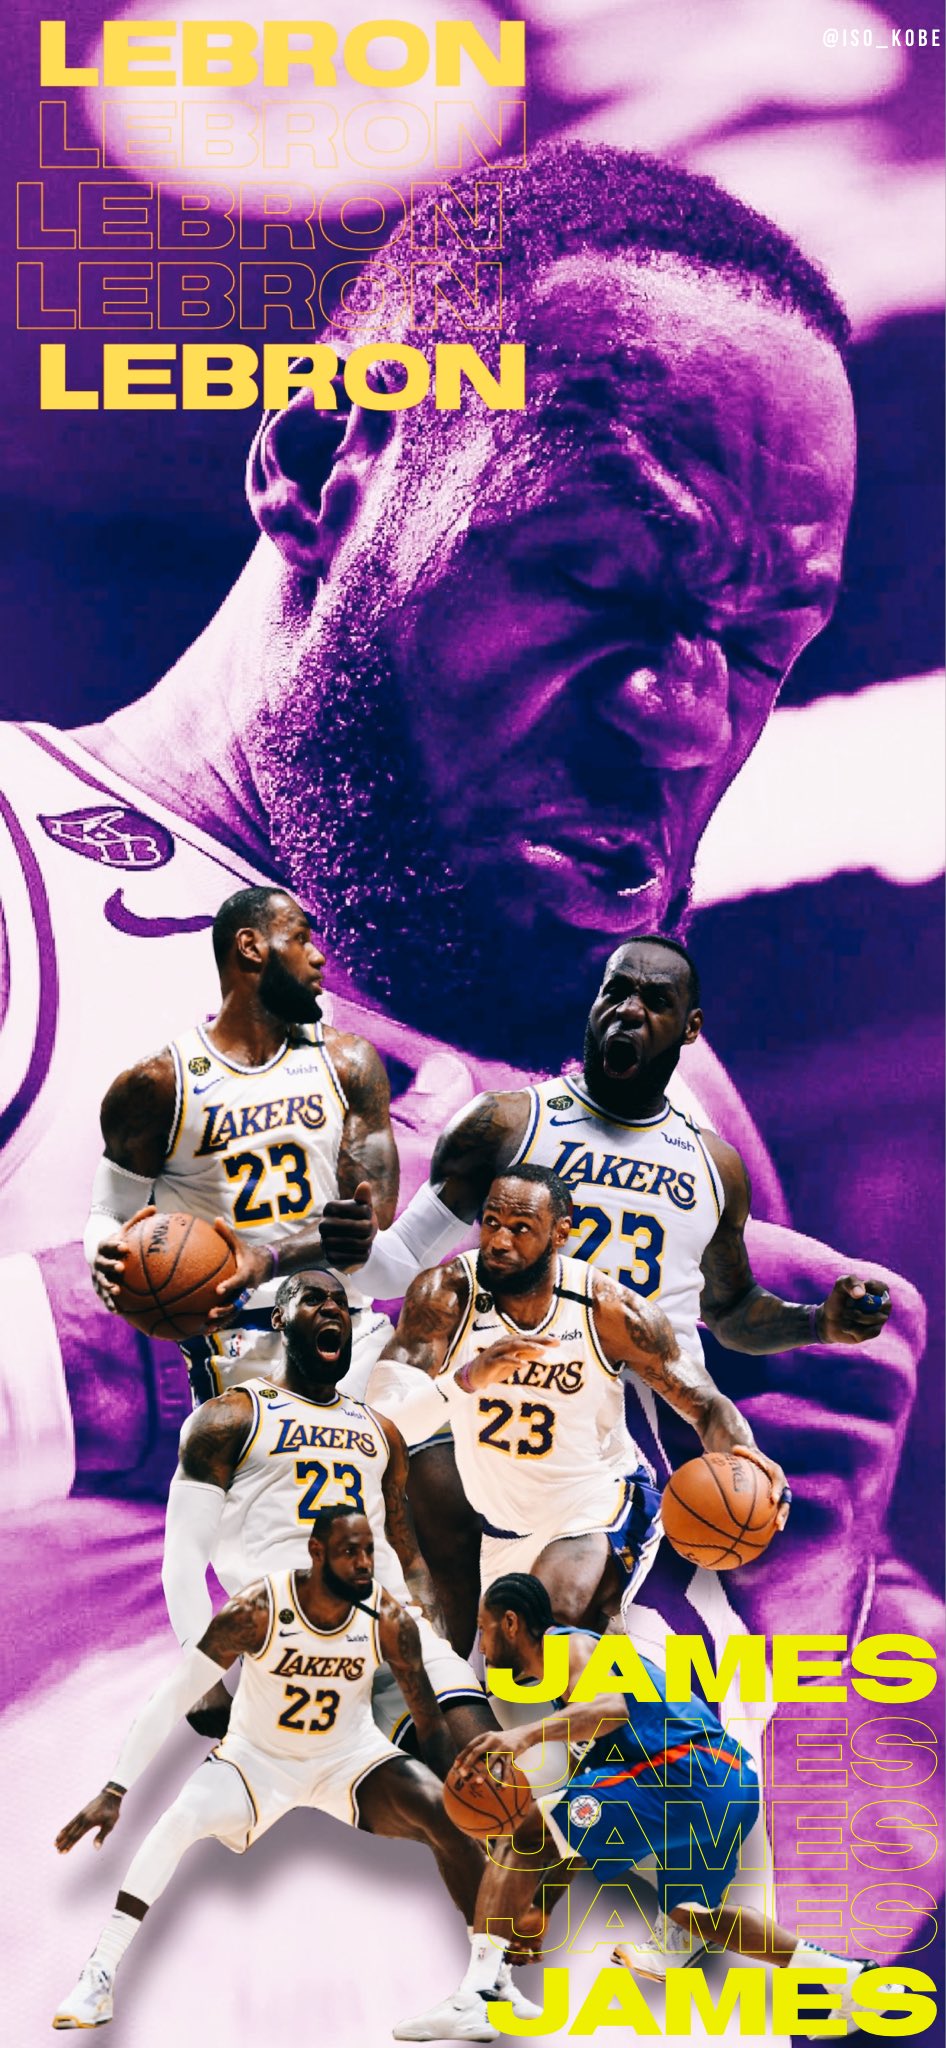 LeBron James 2020 wallpaper